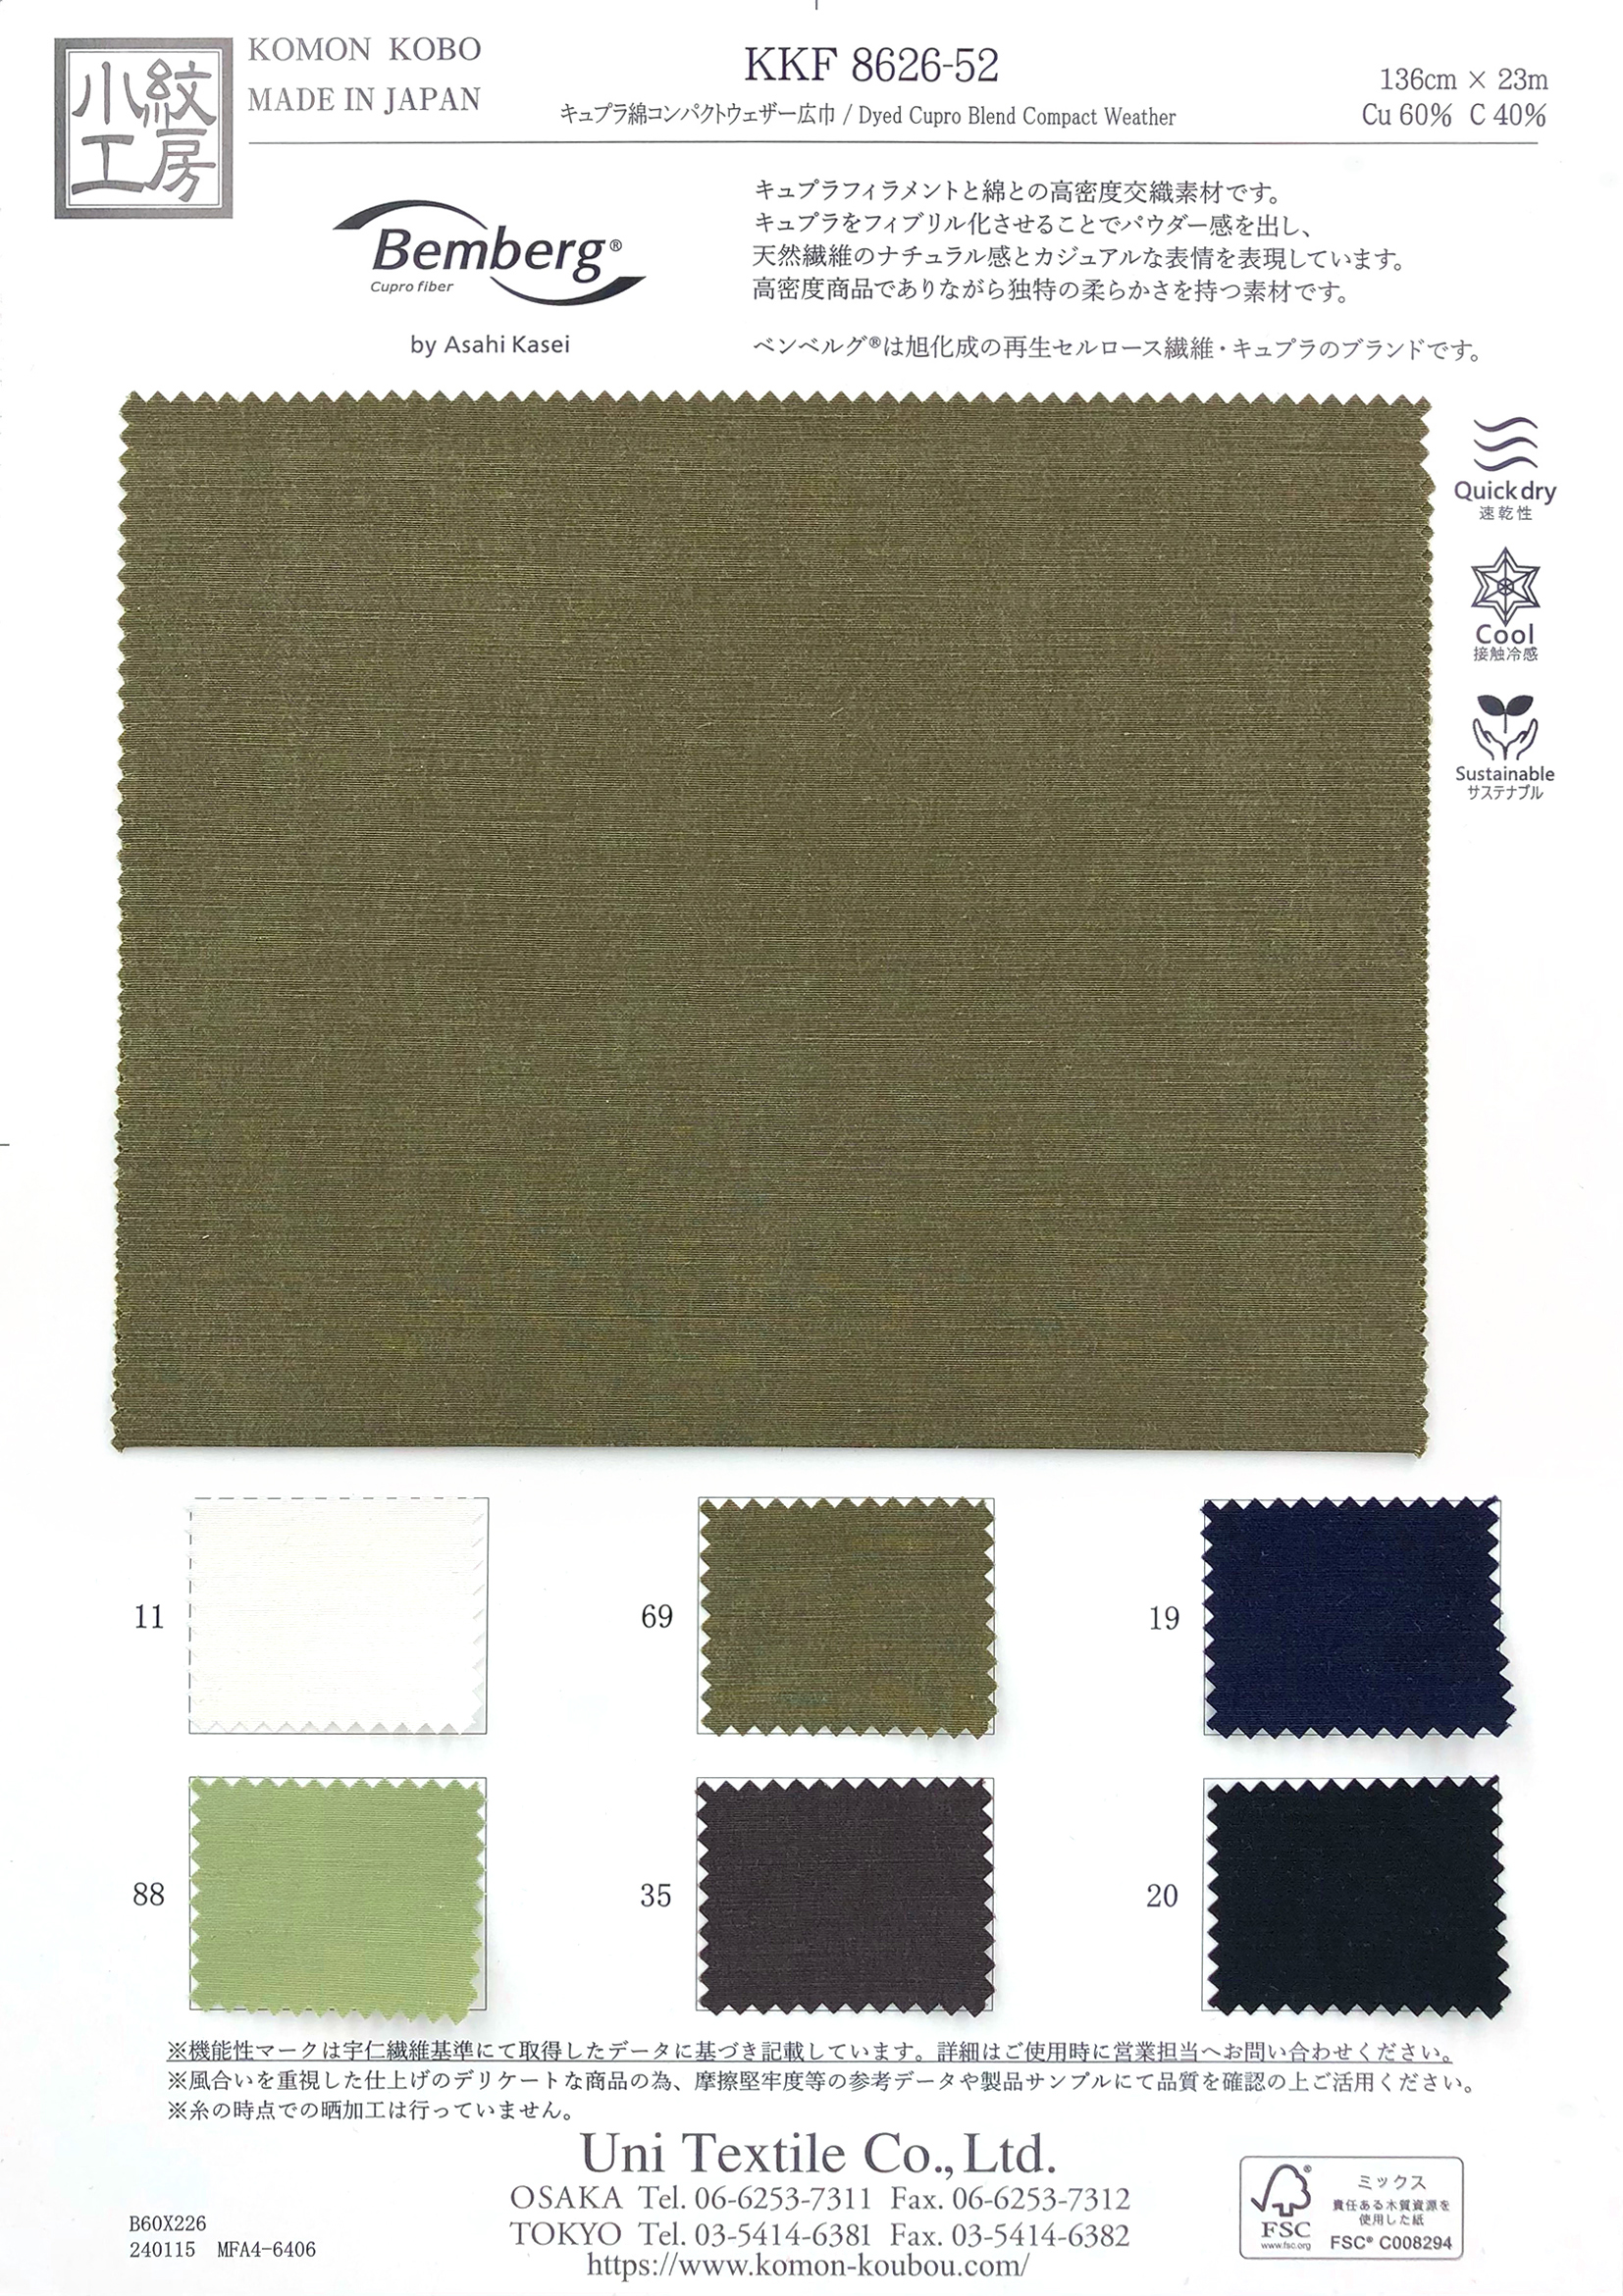 KKF8626-52 キュプラ綿コンパクトウェザー広巾